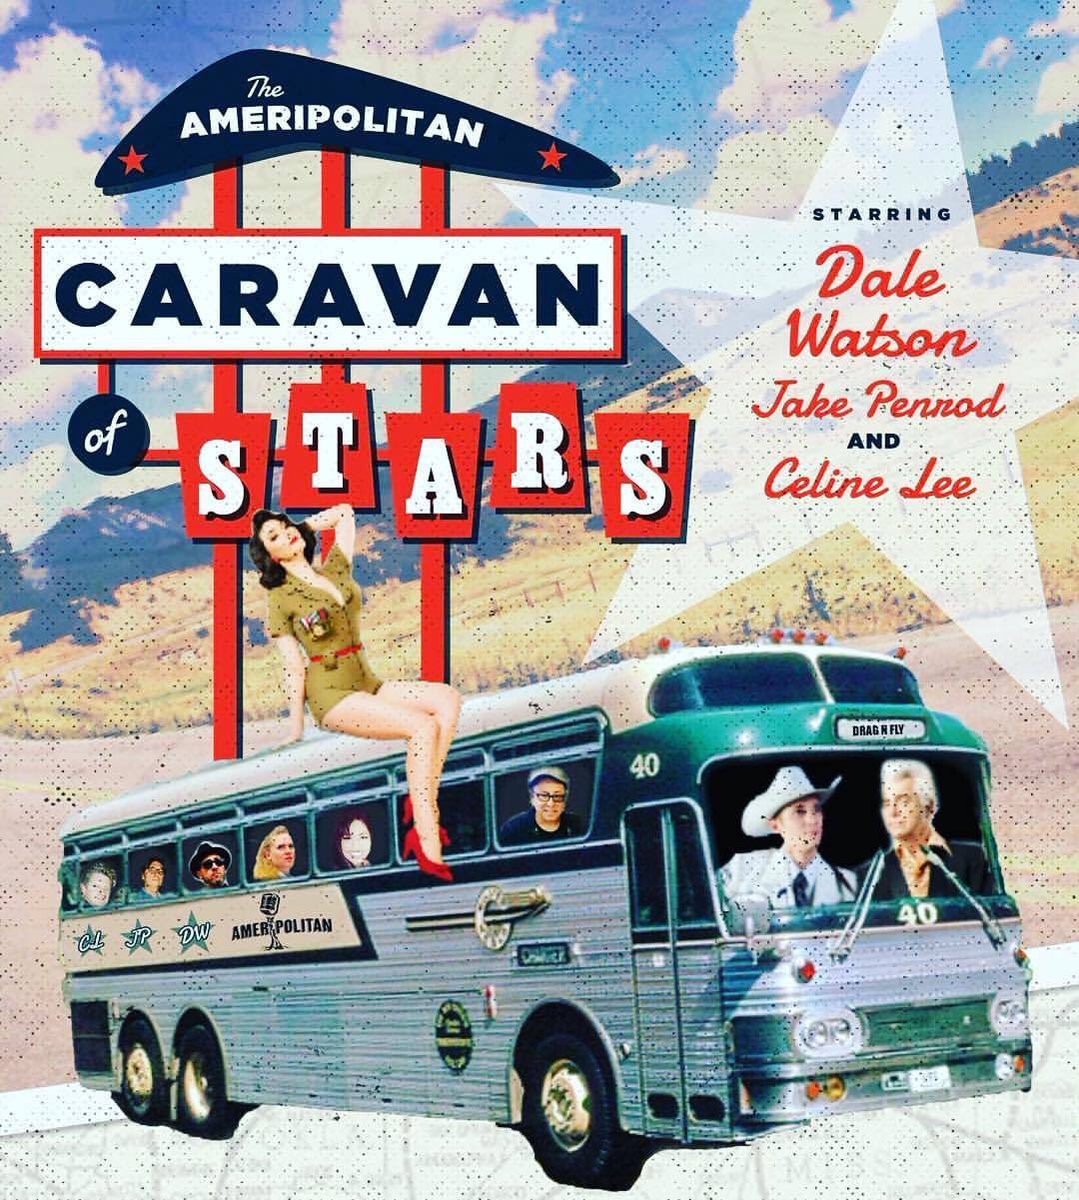 The Ameripolitan Caravan of Stars rolls into @Knuckleheadskc in Kansas City TONIGHT!